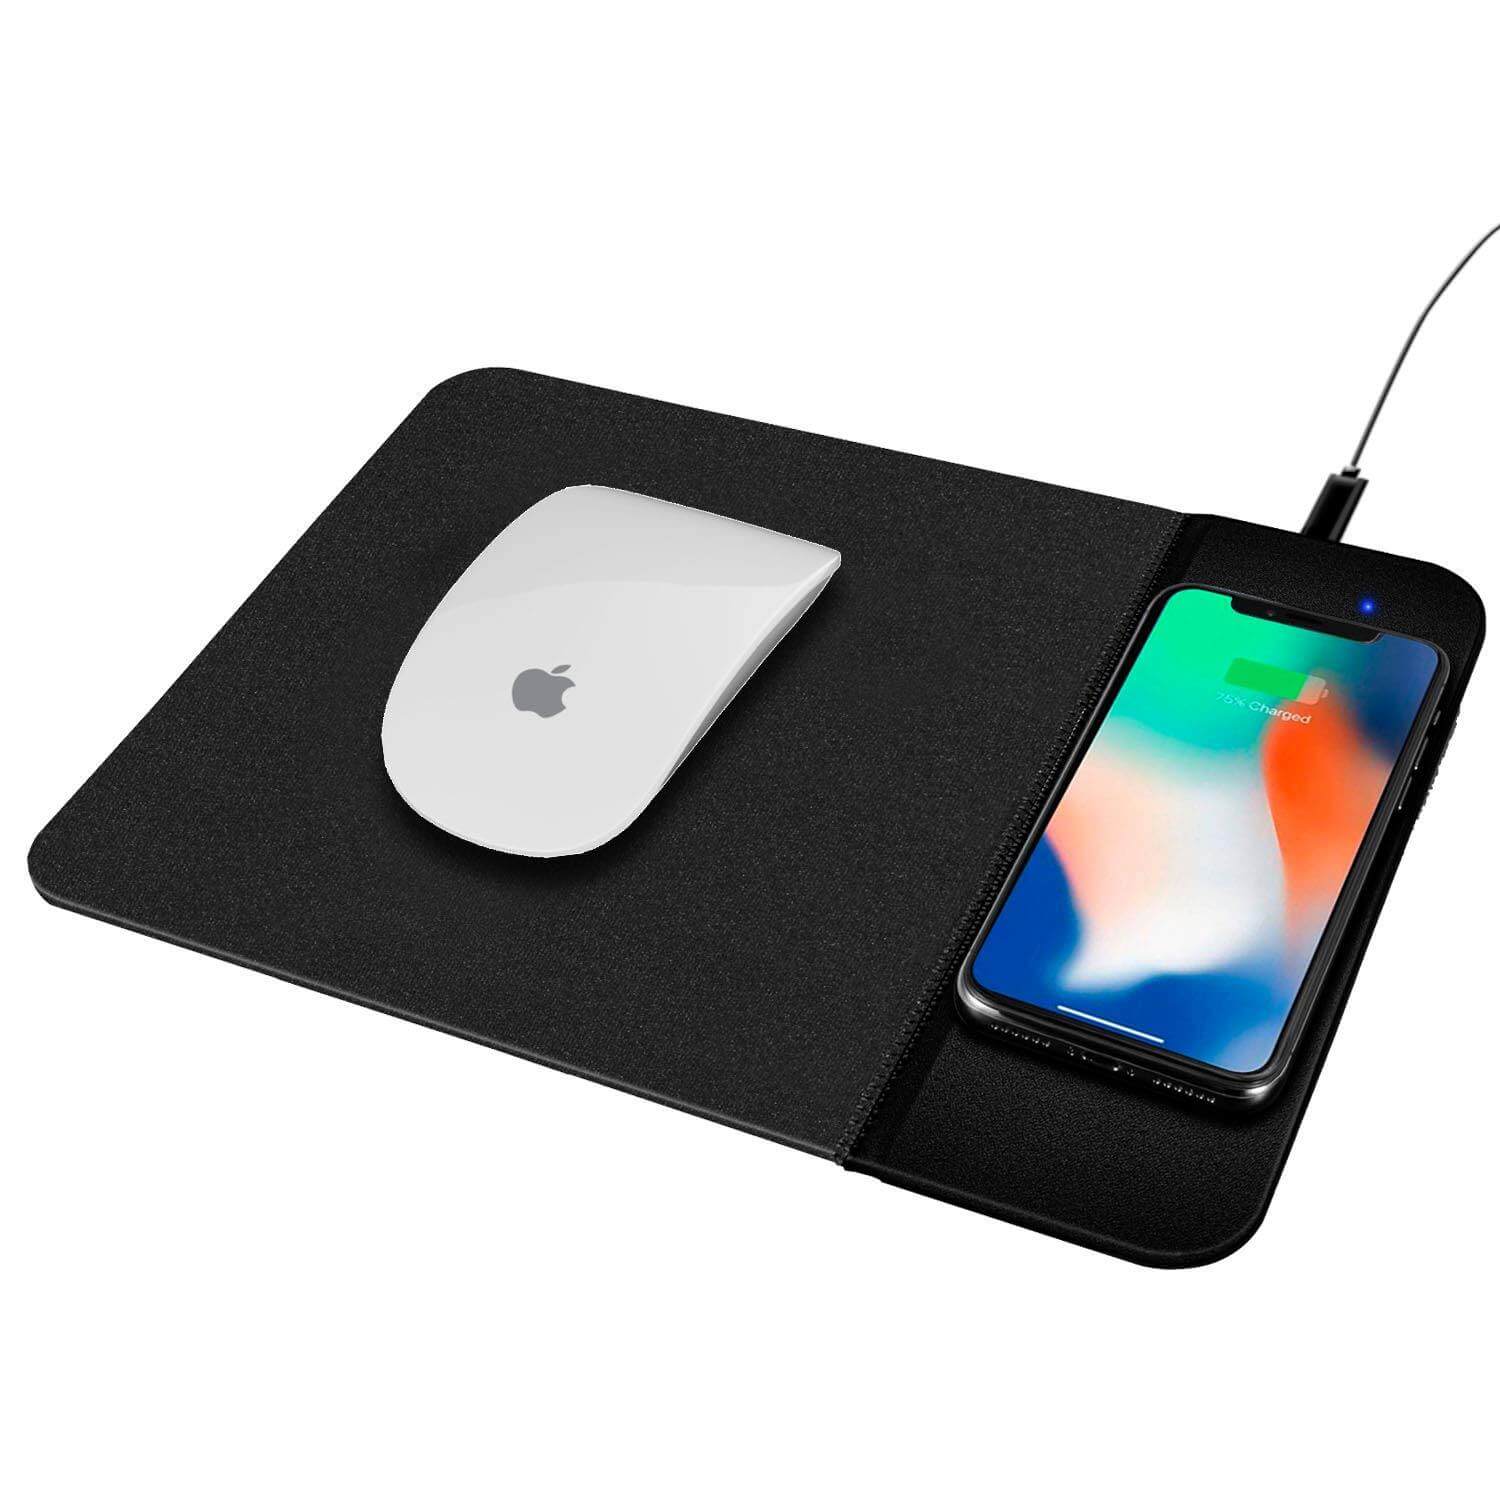 Mouse pad antideslizante y cargador de celular